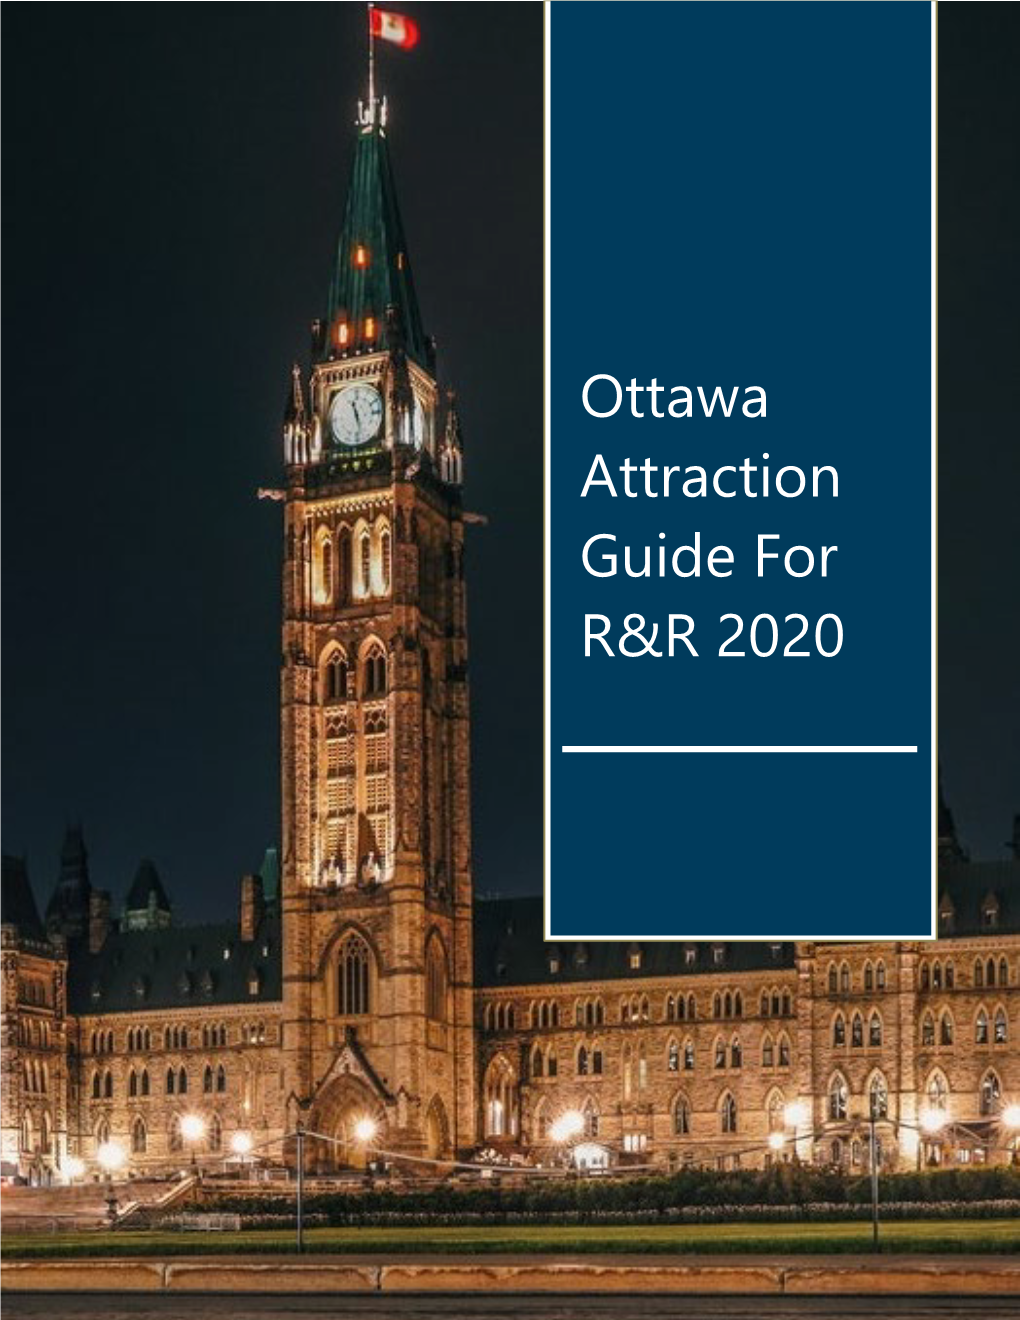 Ottawa Attraction Guide for R&R 2020